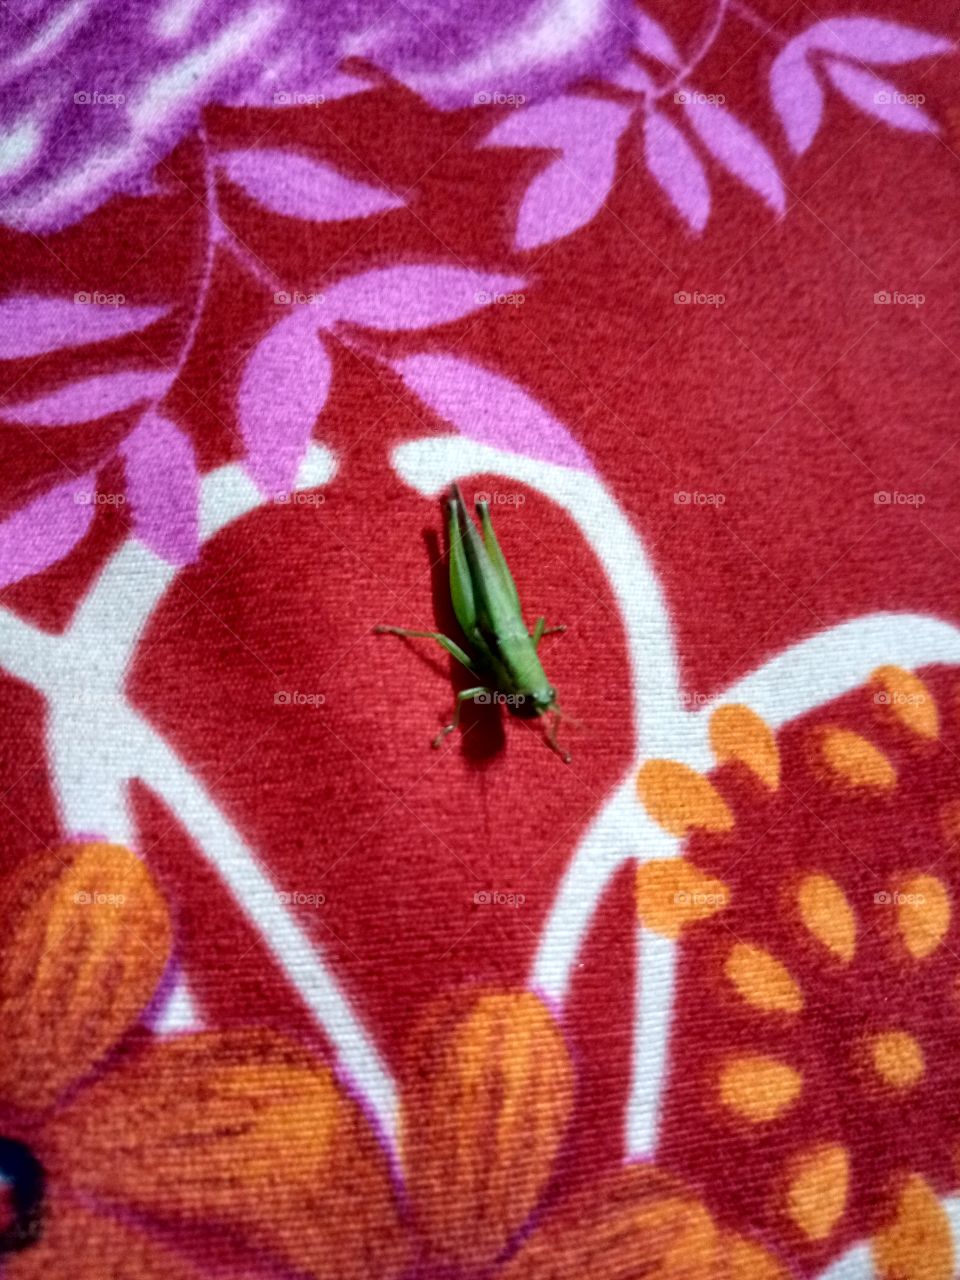 grasshopper at bed